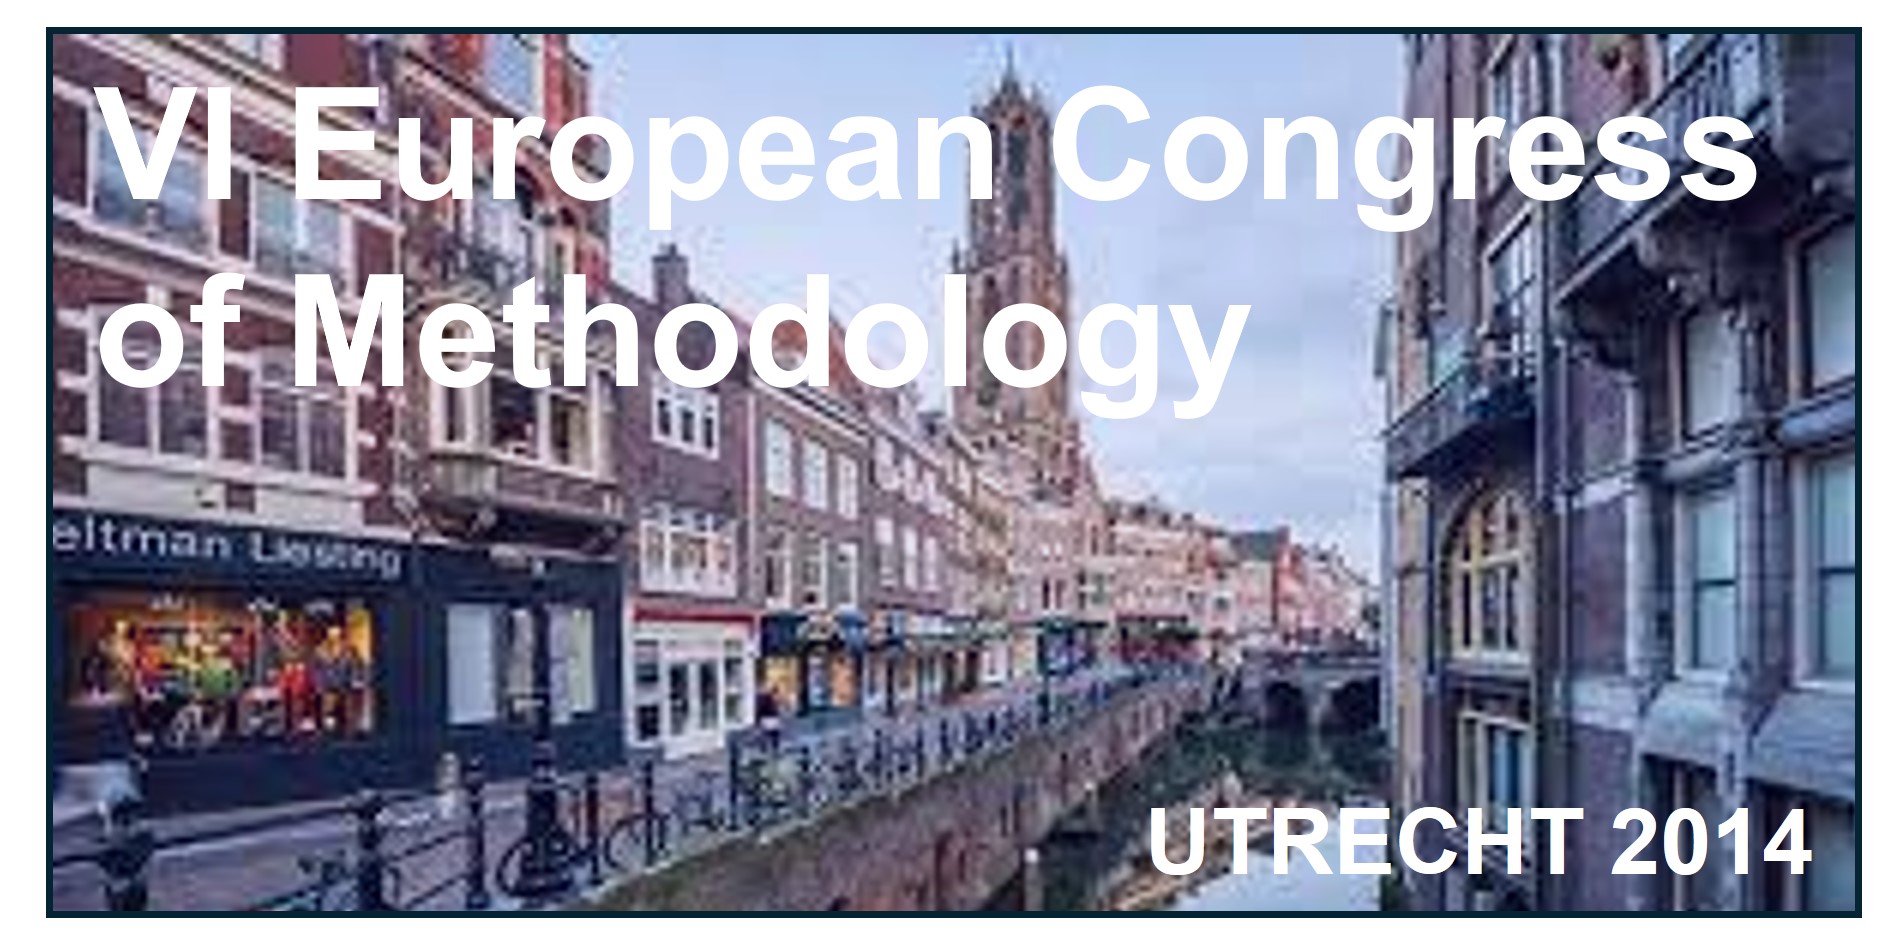    VI European Congress of Methodology